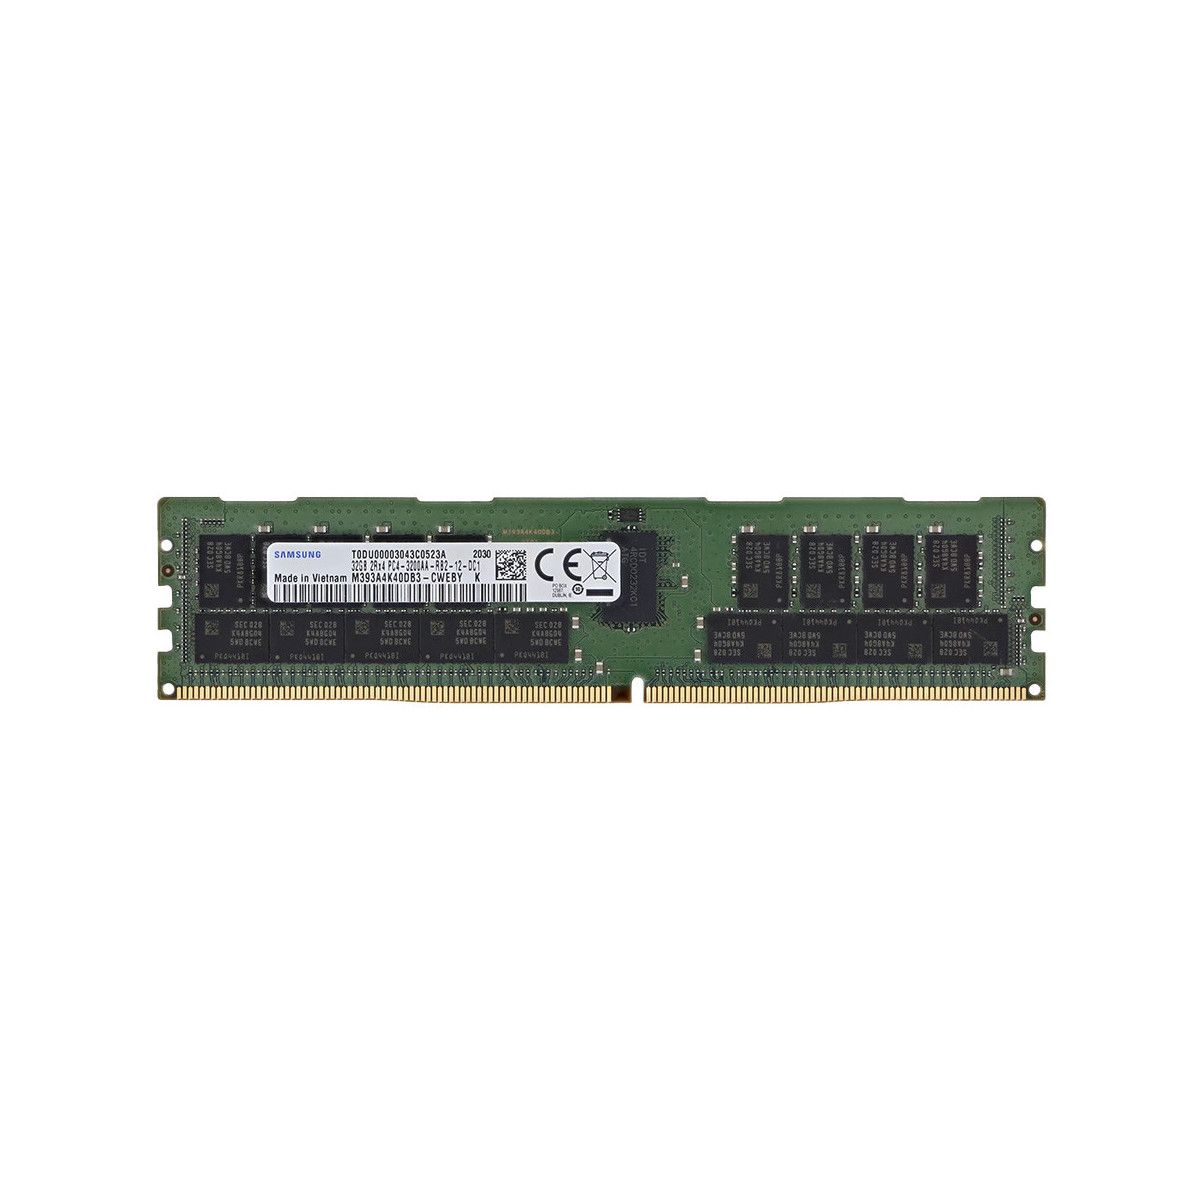 UCSX-MR-X32G2RW-MS - Memstar 1x 32GB DDR4-3200 RDIMM PC4-25600R - OEM compatible con Mem-Star Memoria 1 - Memstar 